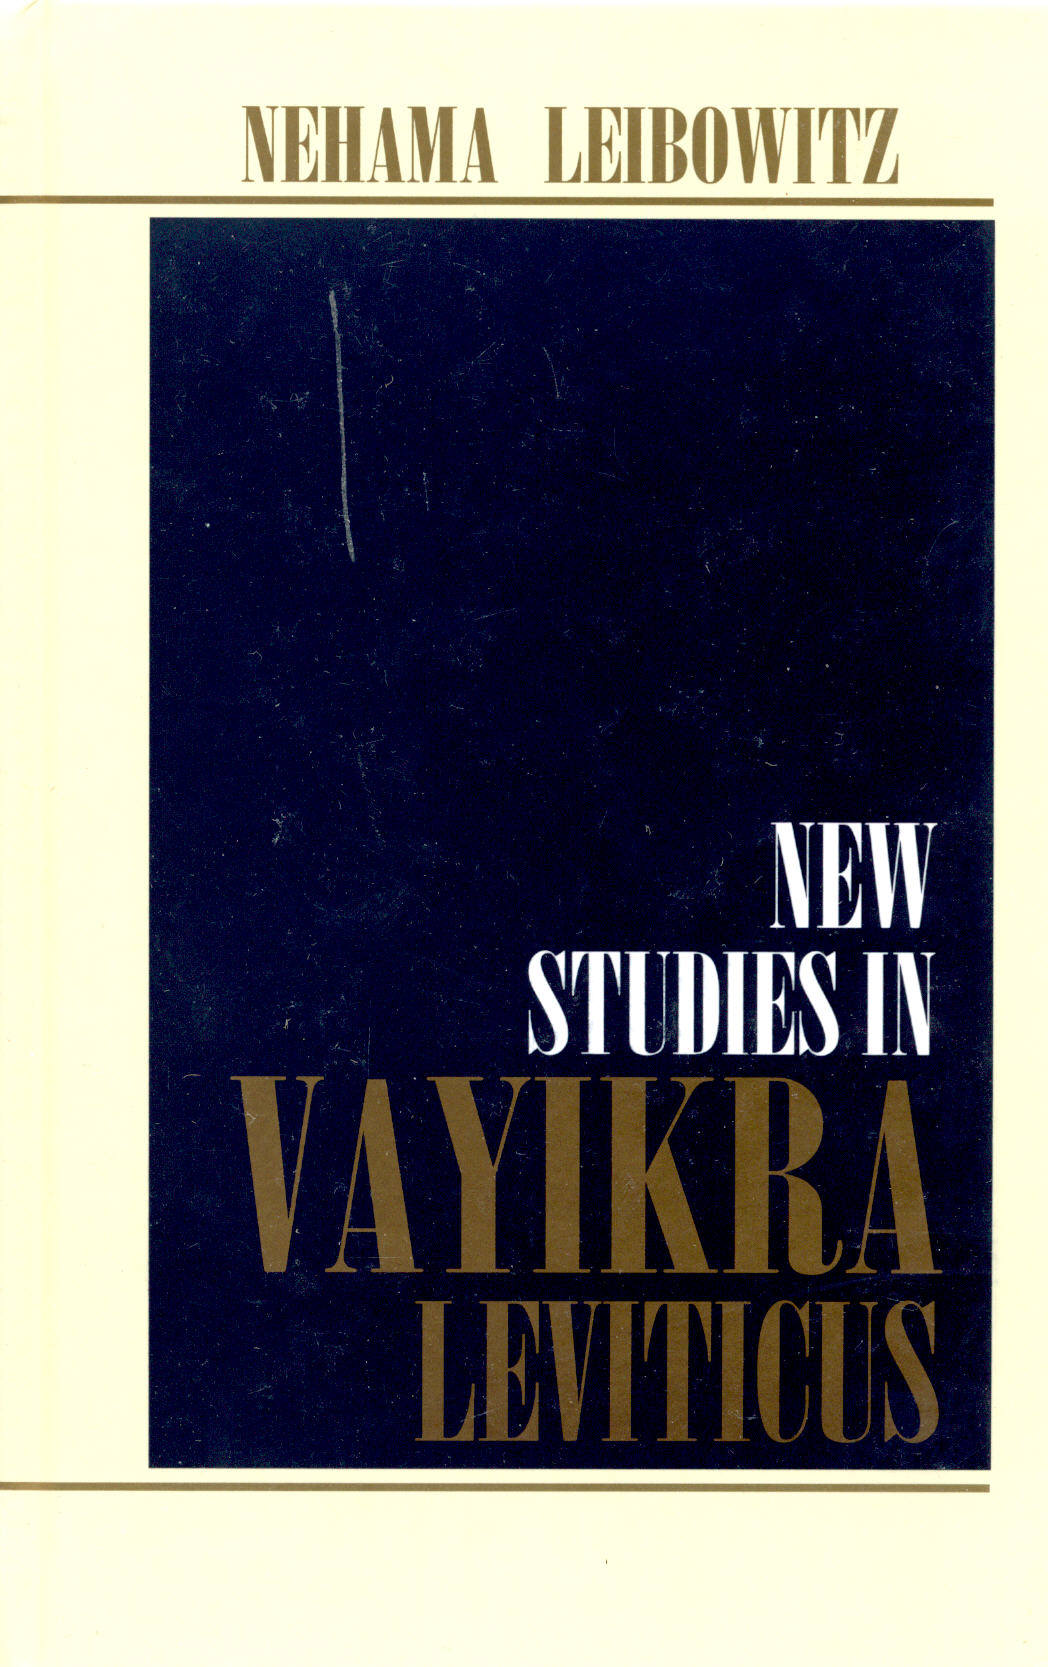 New Studies in Vayikra (Leviticus)